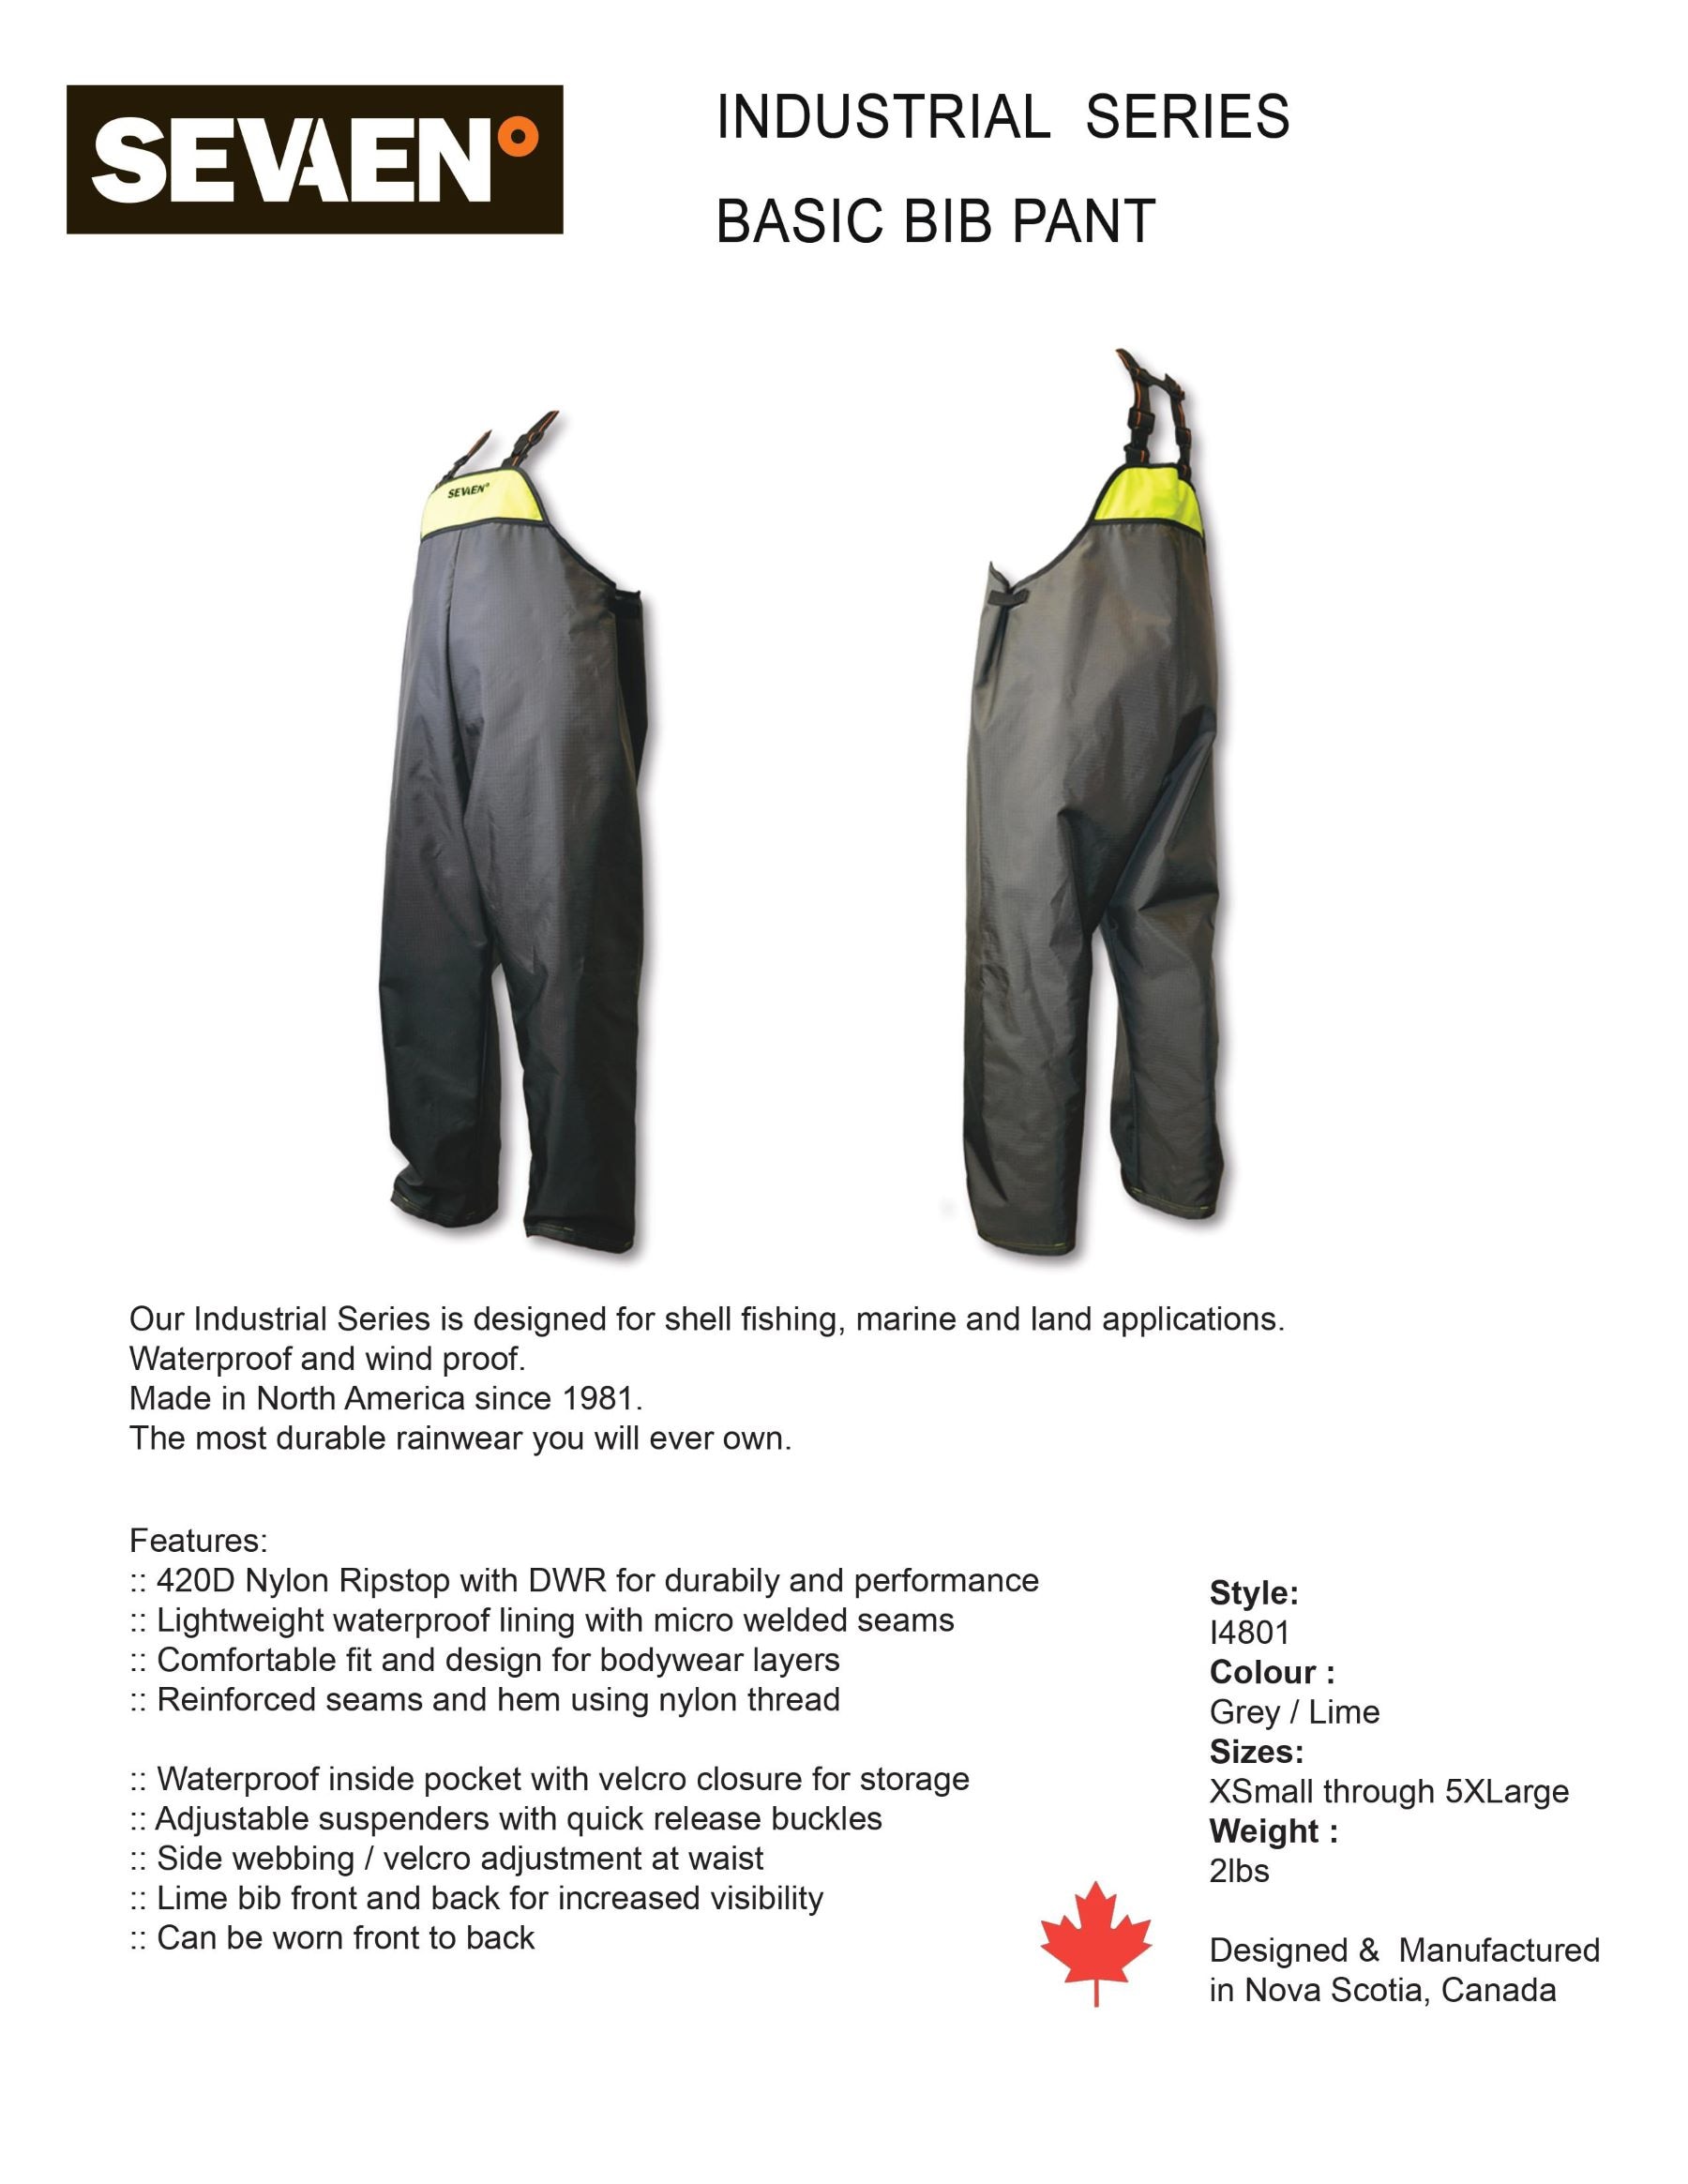 Sevaen Industrial unisex adult L/XL Bib Pants | I4801-LRG